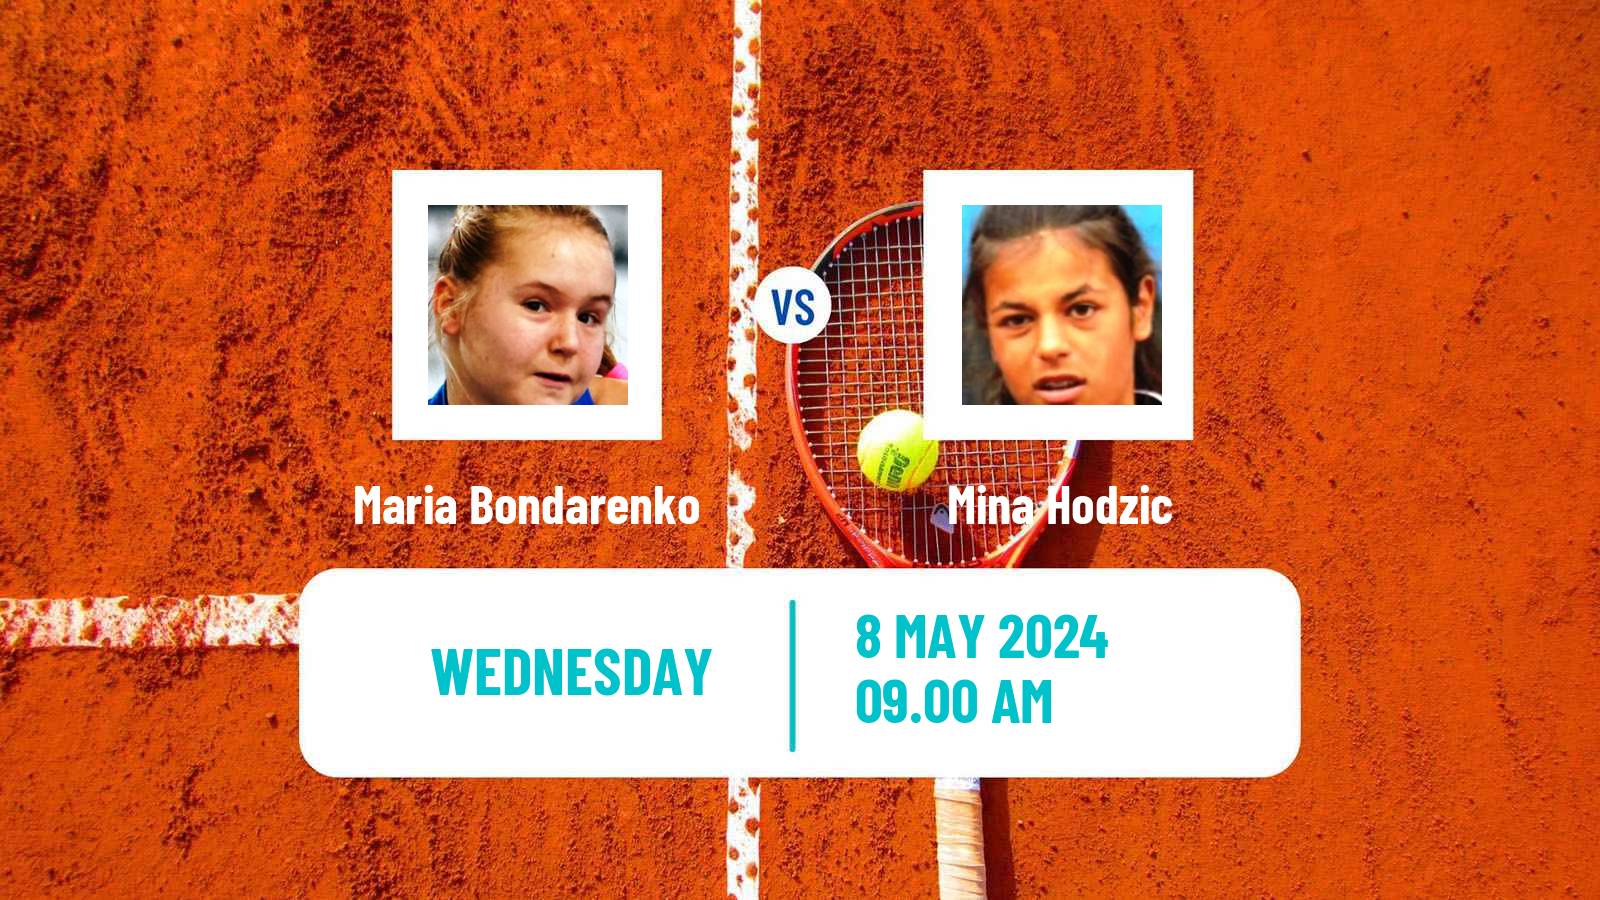 Tennis ITF W35 Platja D Aro Women Maria Bondarenko - Mina Hodzic